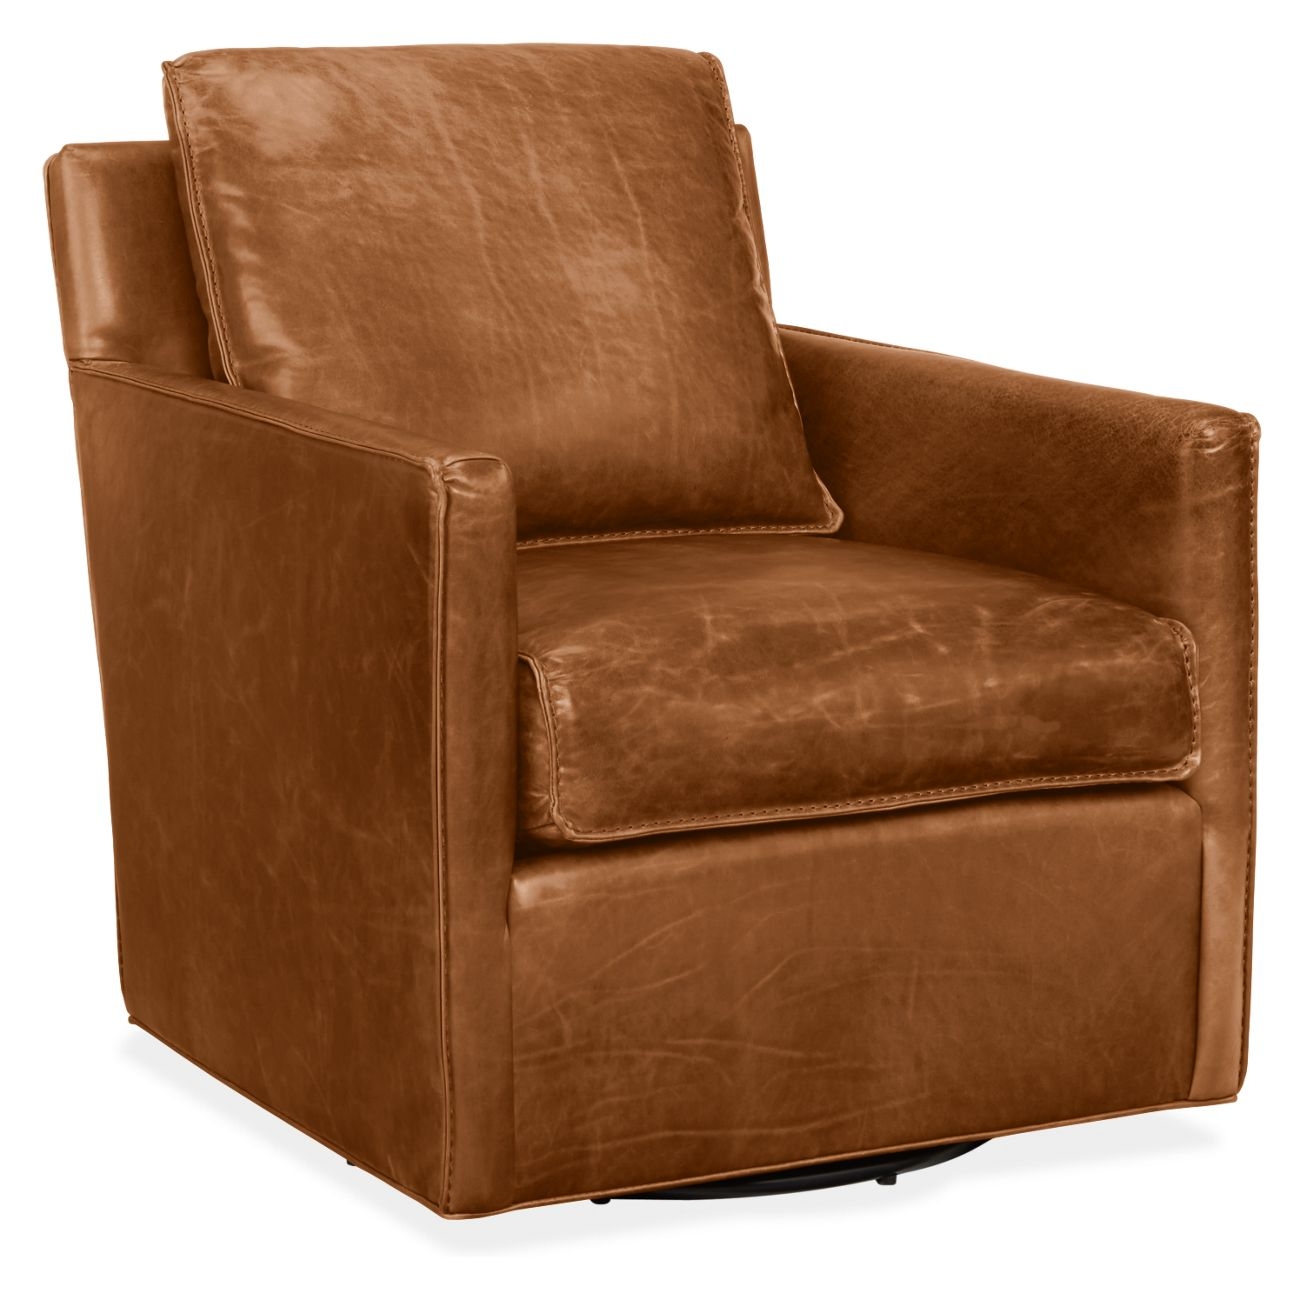 Vento cognac Bram Leather Swivel Chair - Image 1